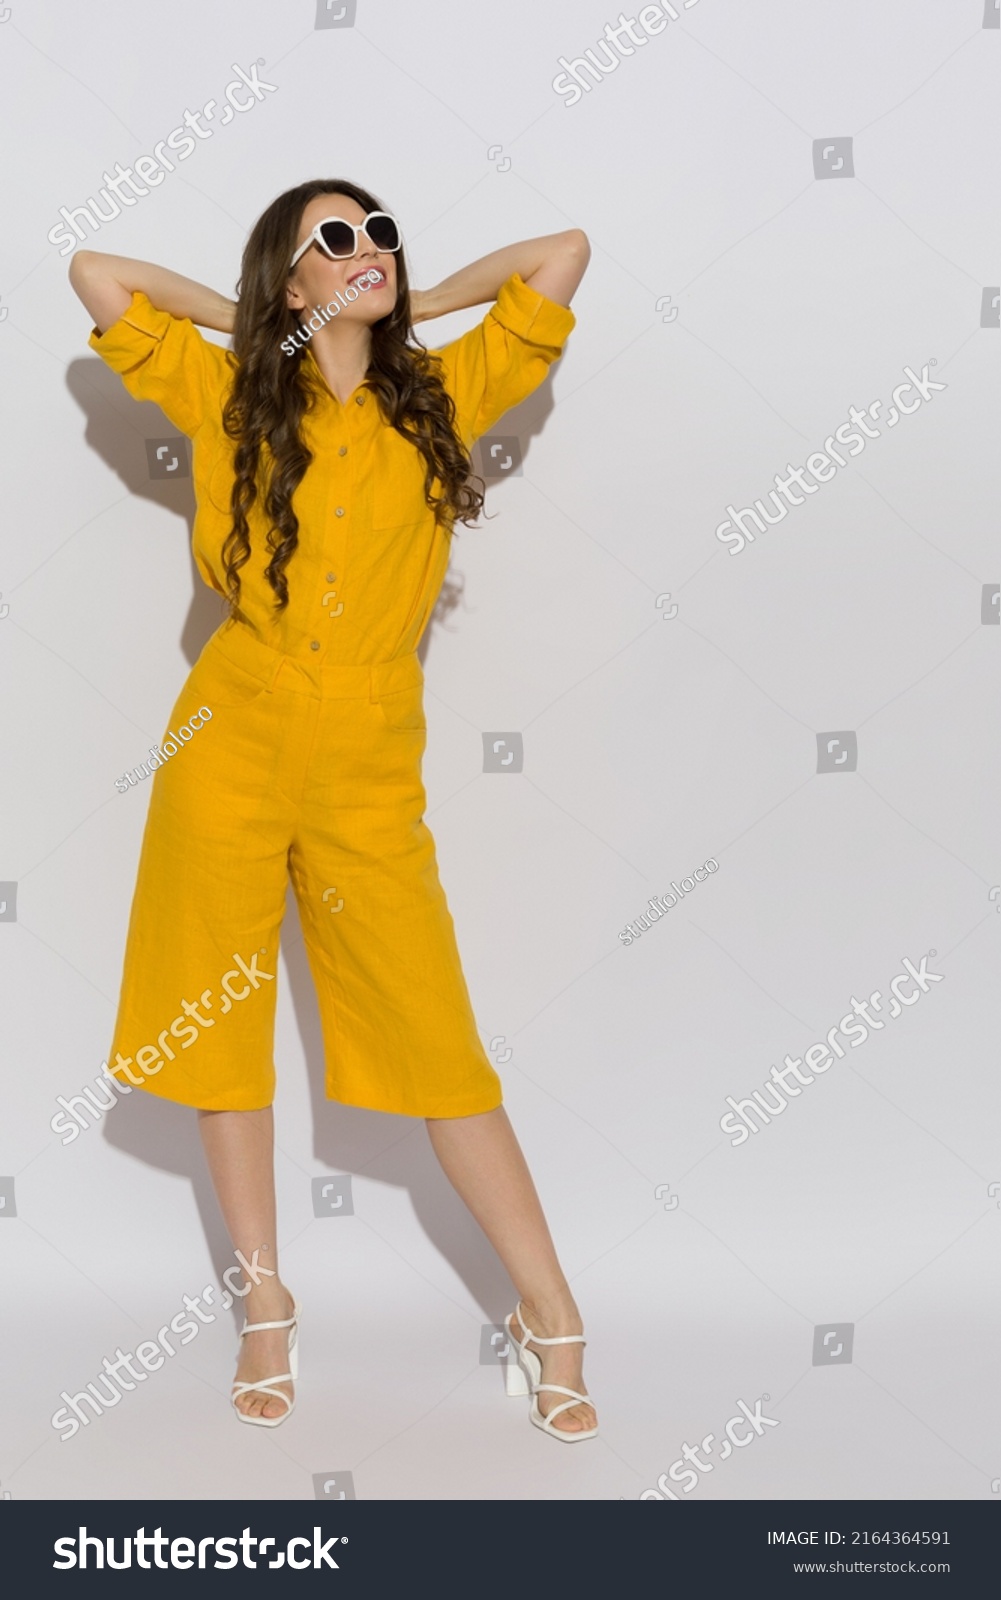 86,206 Linen woman Images, Stock Photos & Vectors | Shutterstock